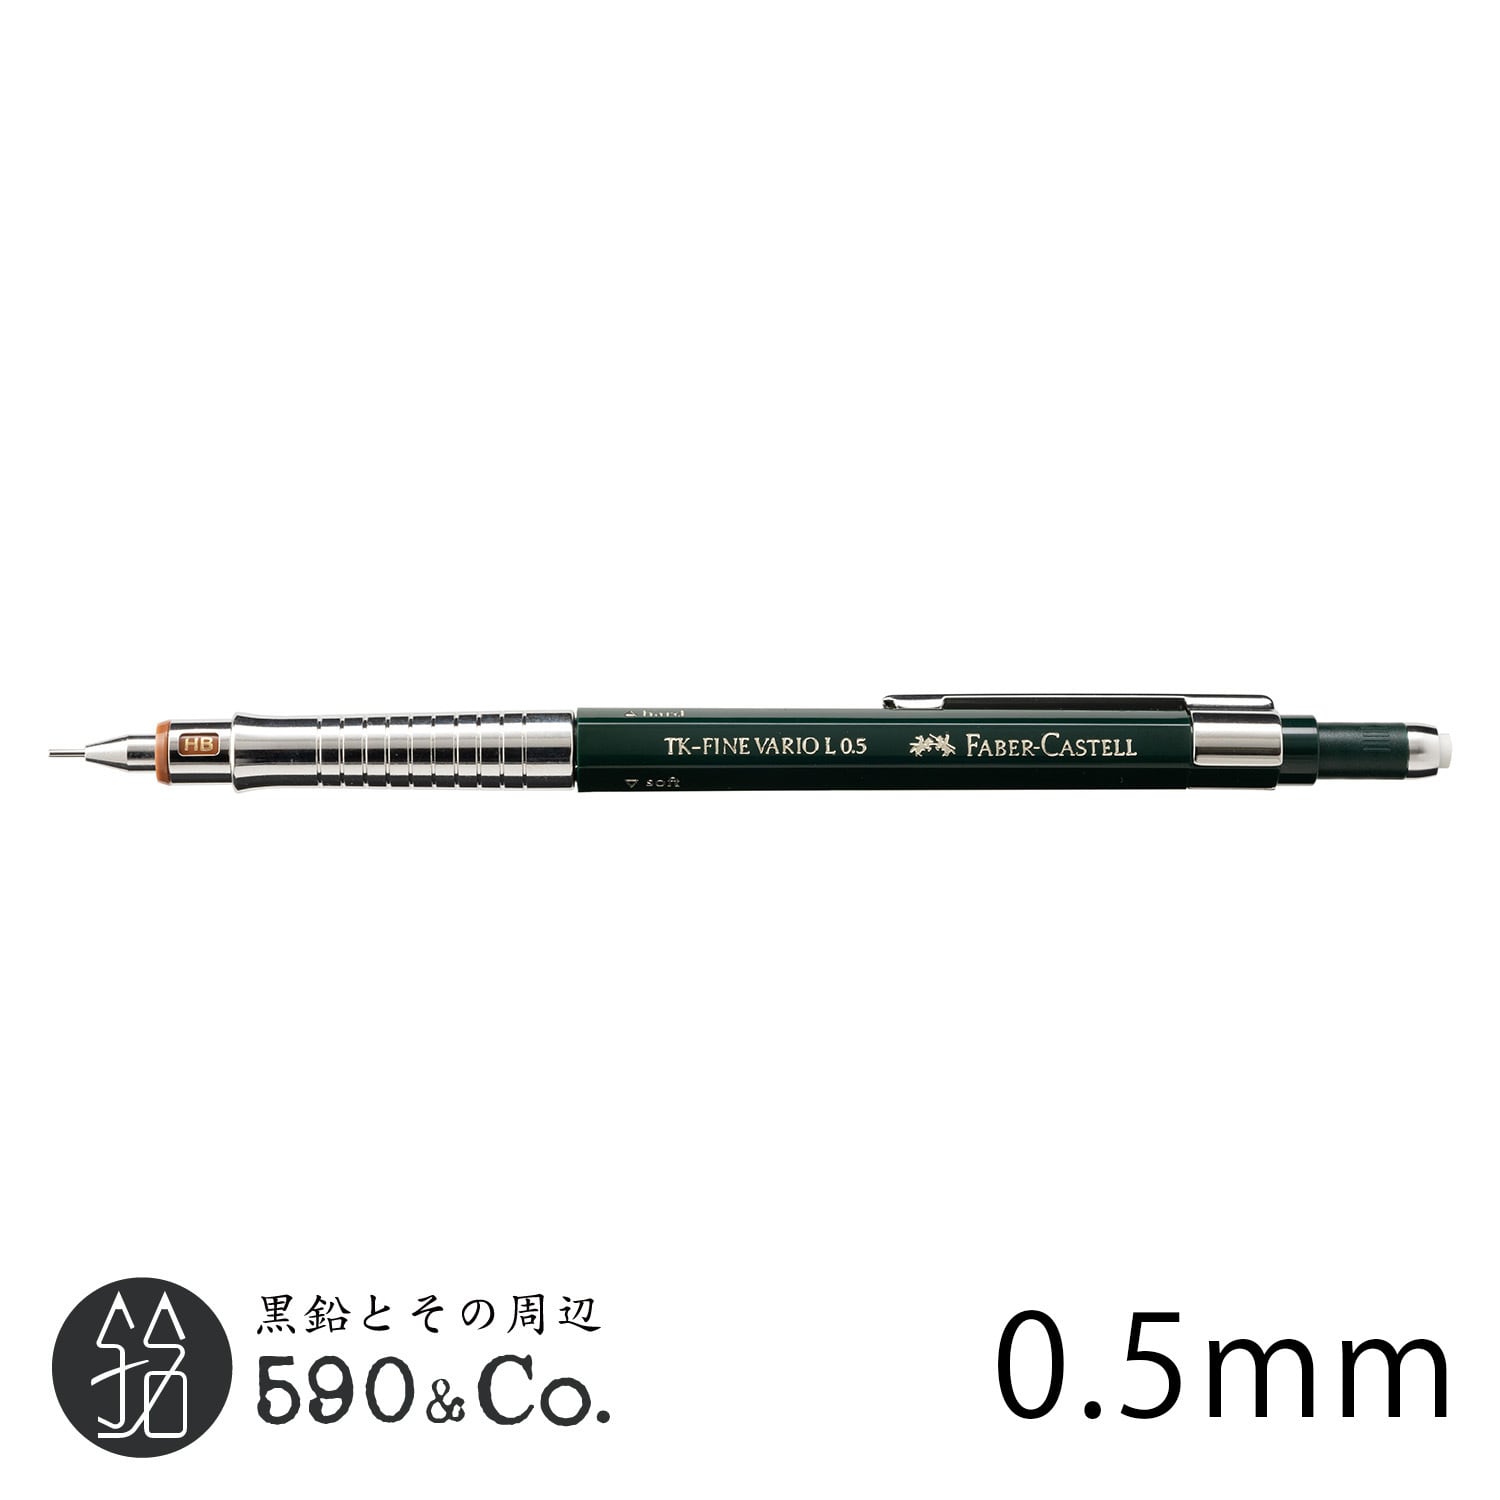 【FABER-CASTELL/ファーバーカステル】TK-FINE バリオL 製図用シャープペンシル(0.5mm) 590Co.